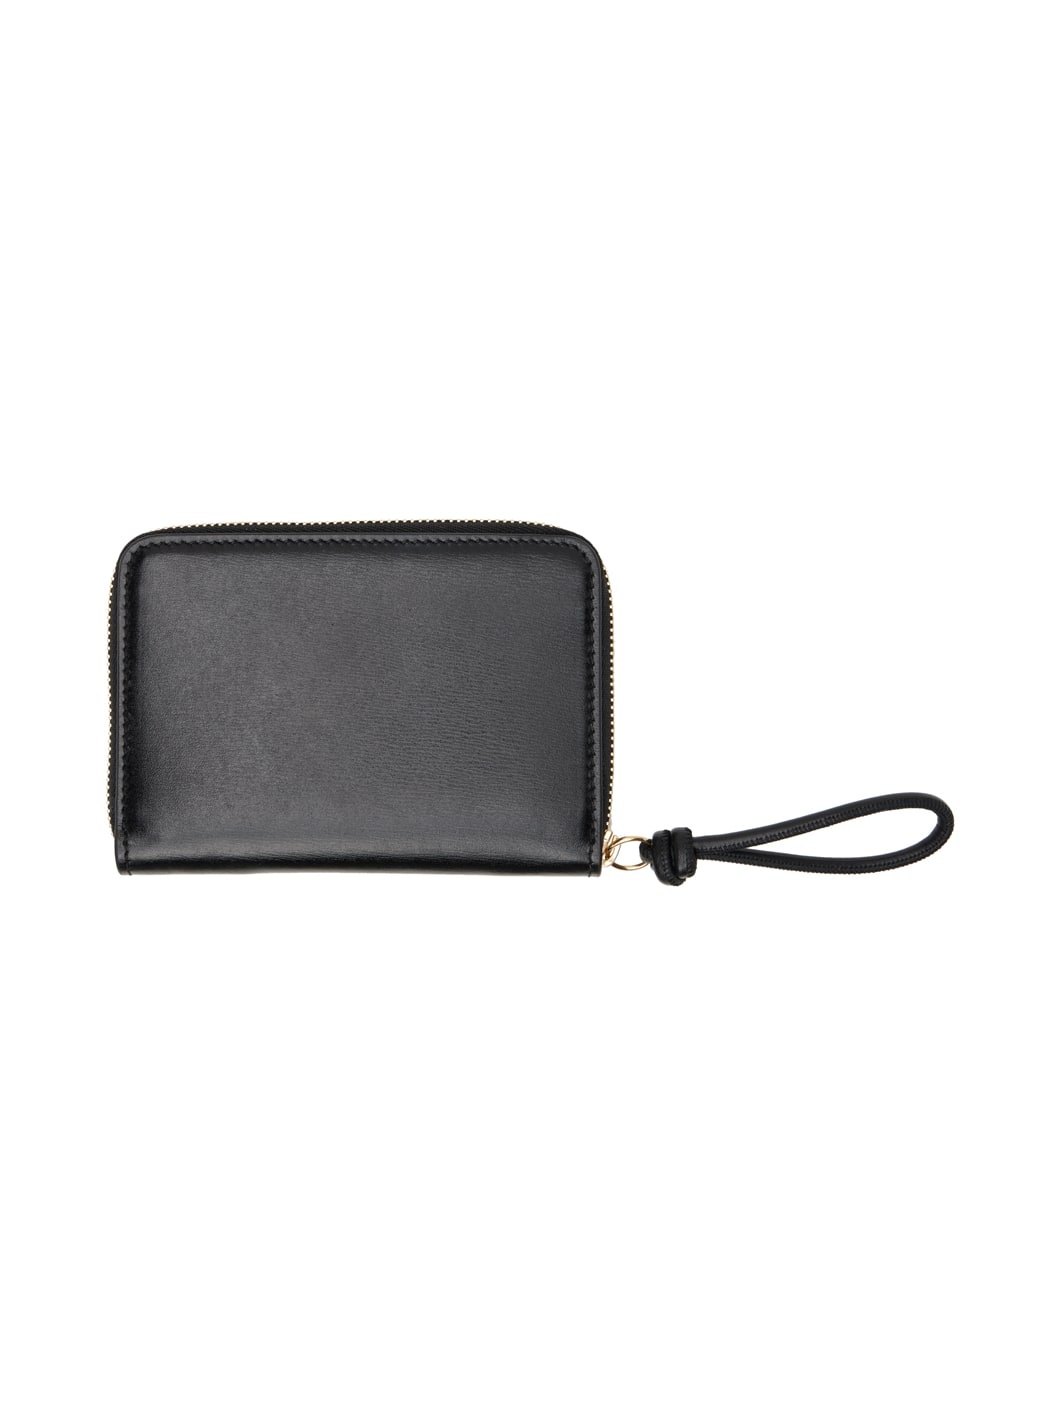 Black Pocket Zip Around Wallet - 2